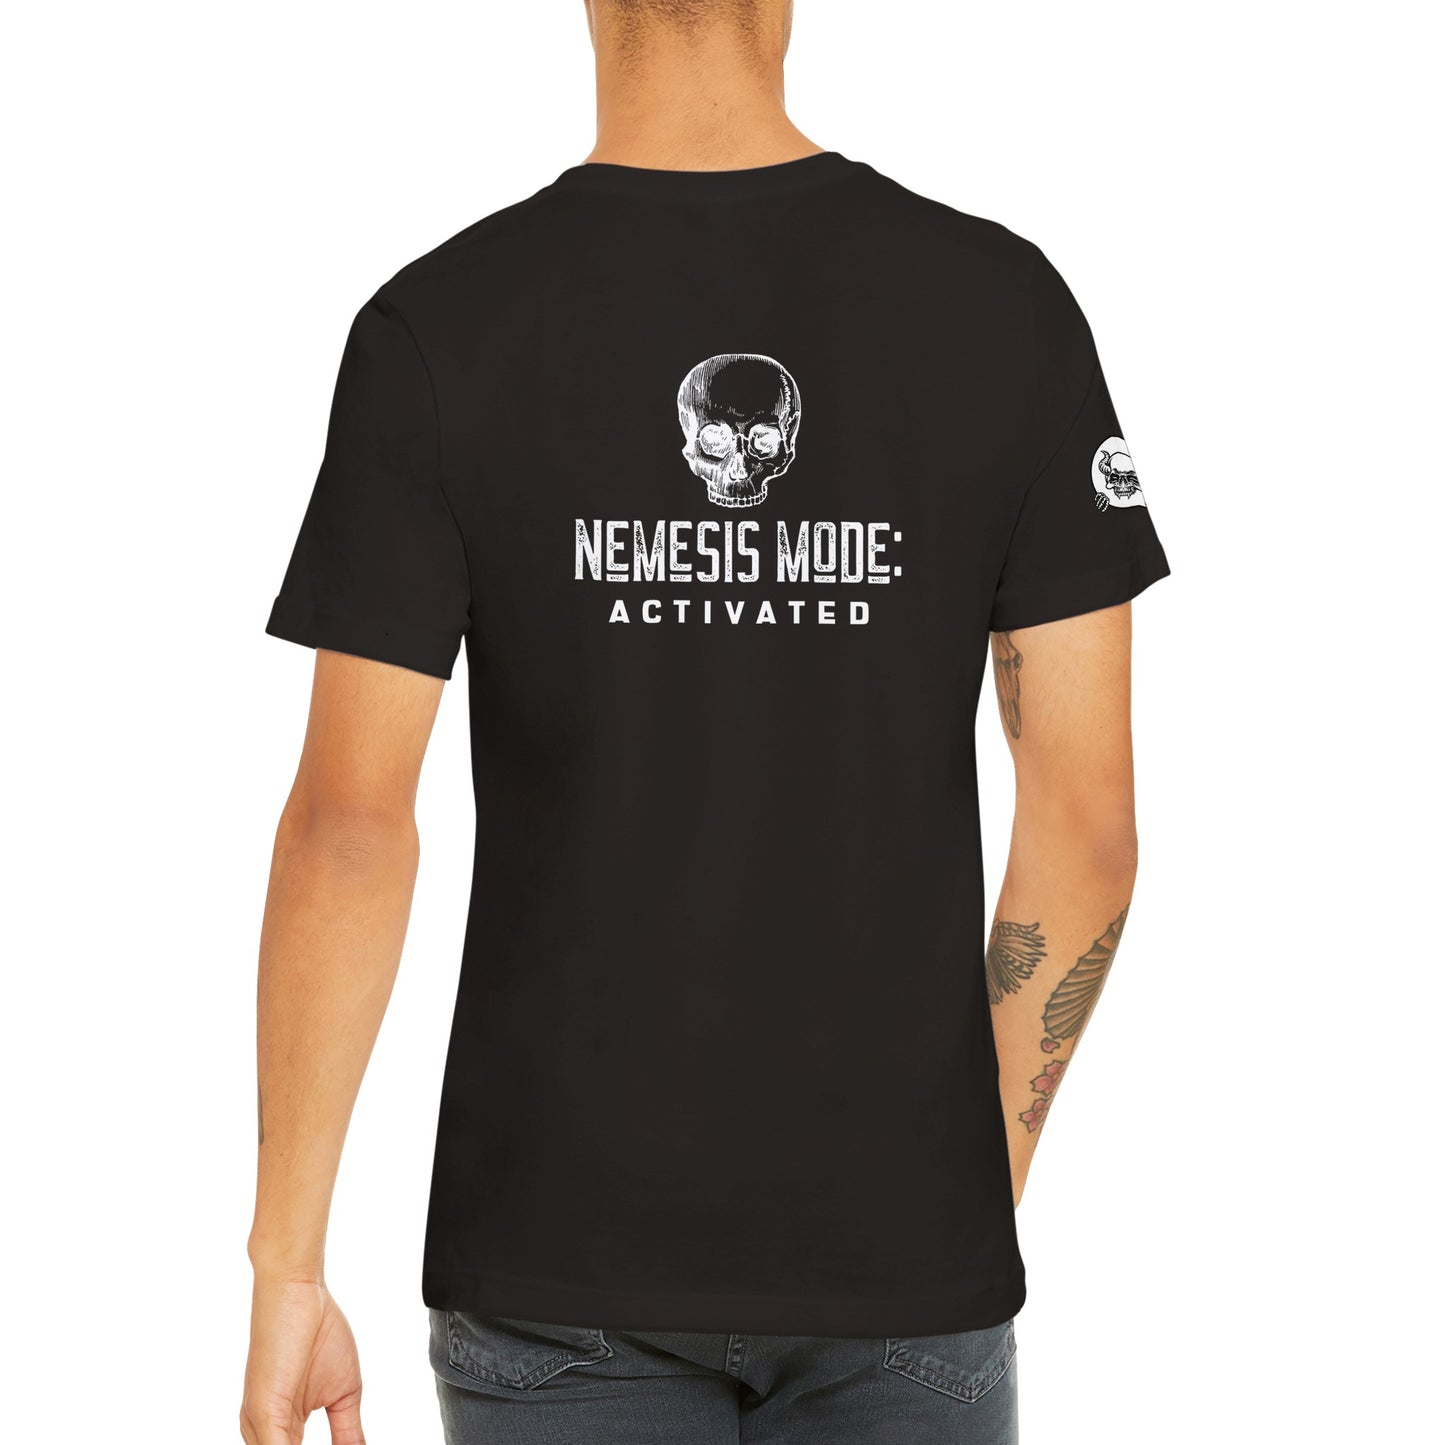 The "Strong Mode" Premium Unisex Crewneck T-shirt